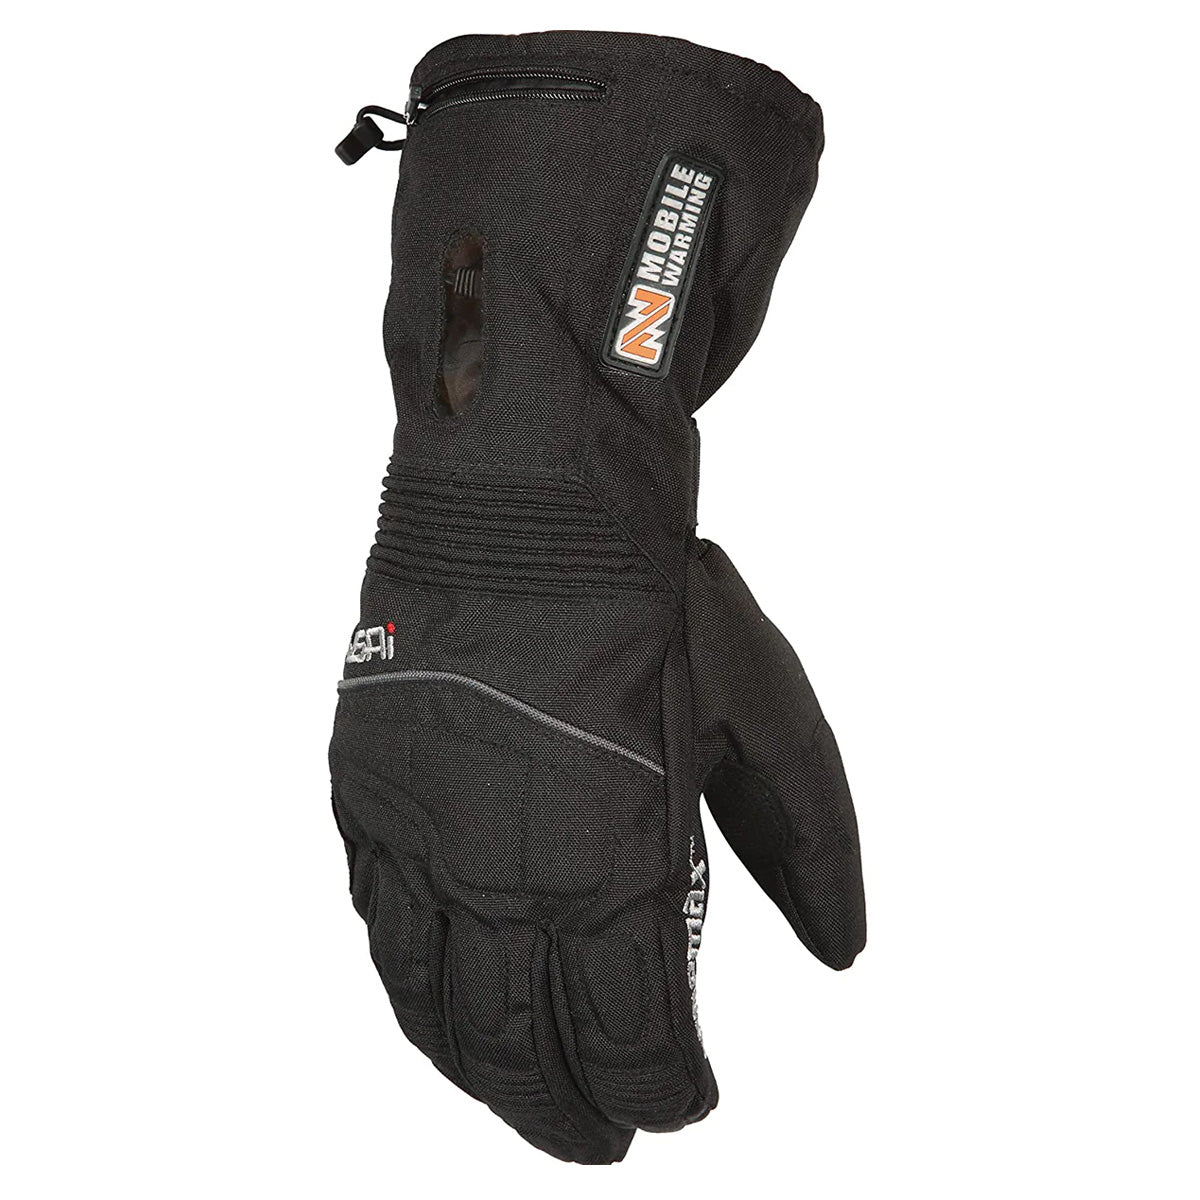 
Mobile Warming TX Heated Men's Street Gloves 